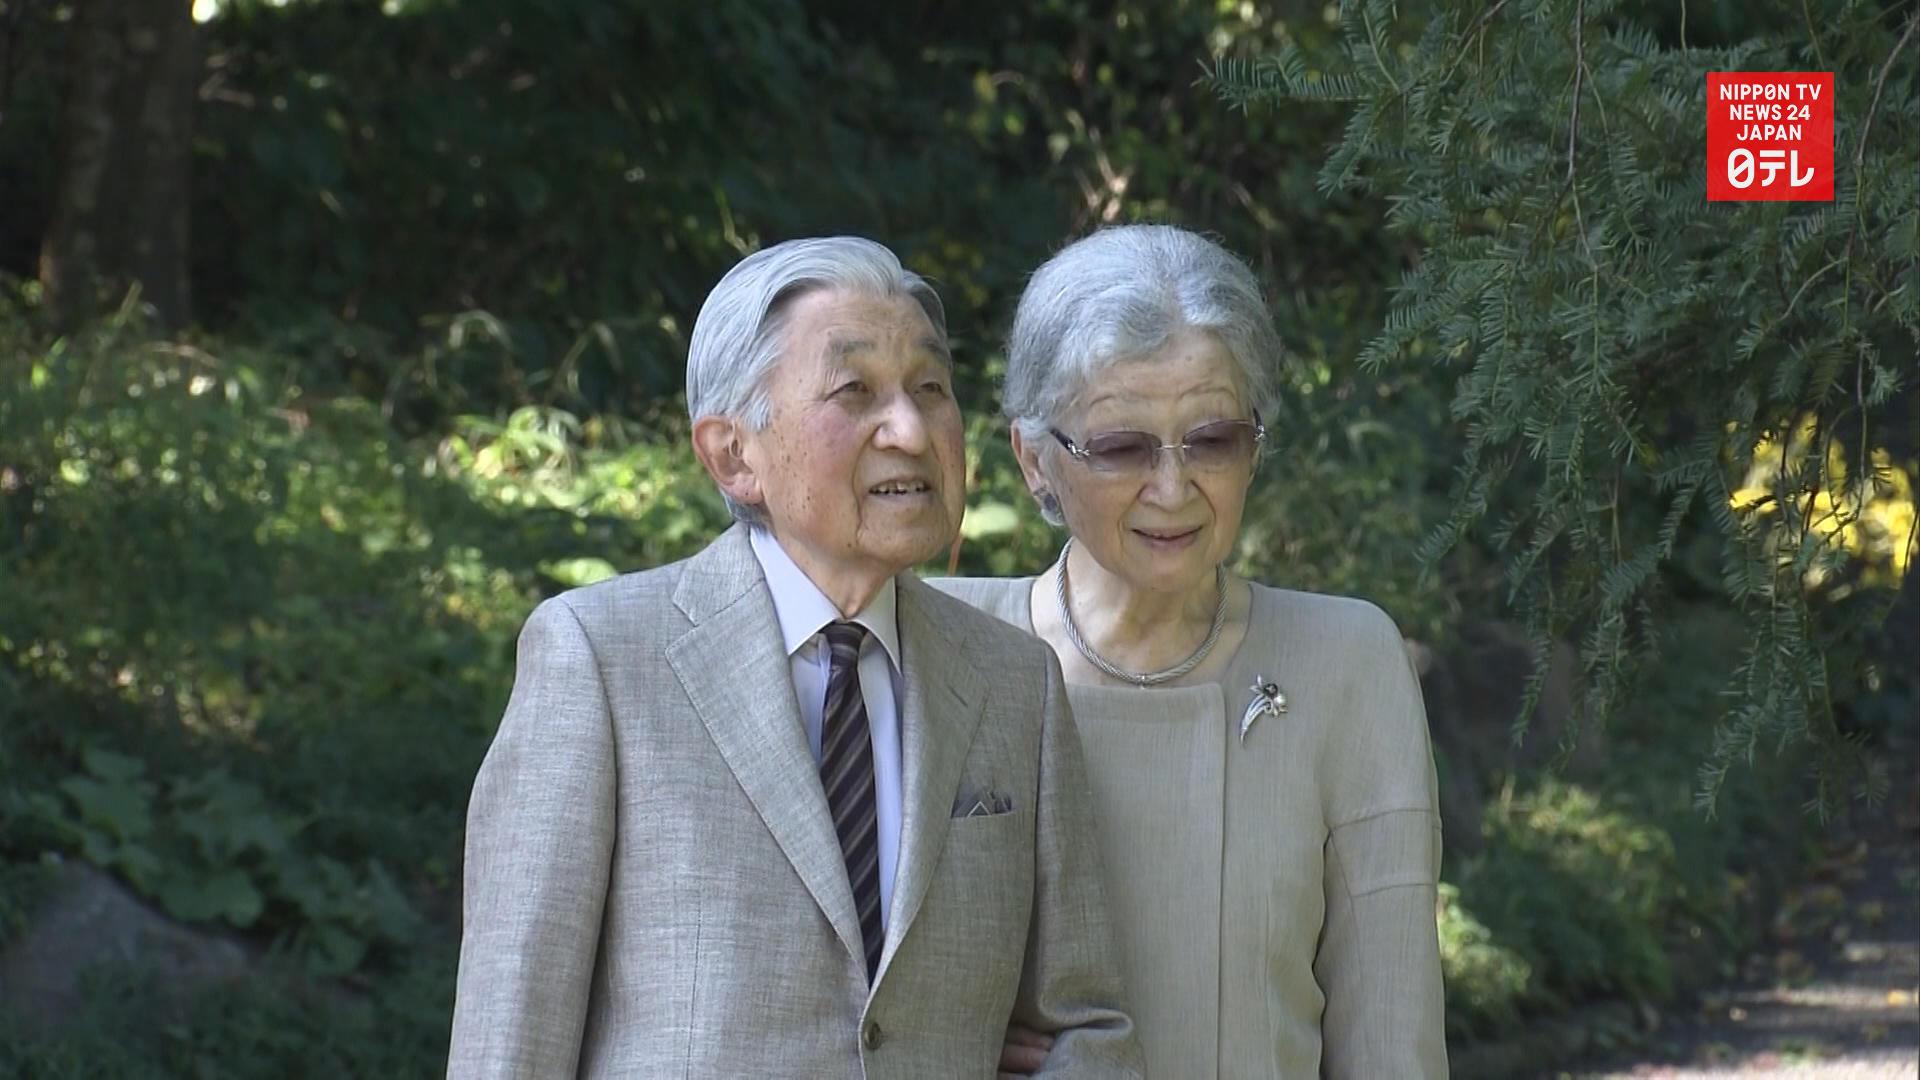 Former Emperor Akihito turns 86